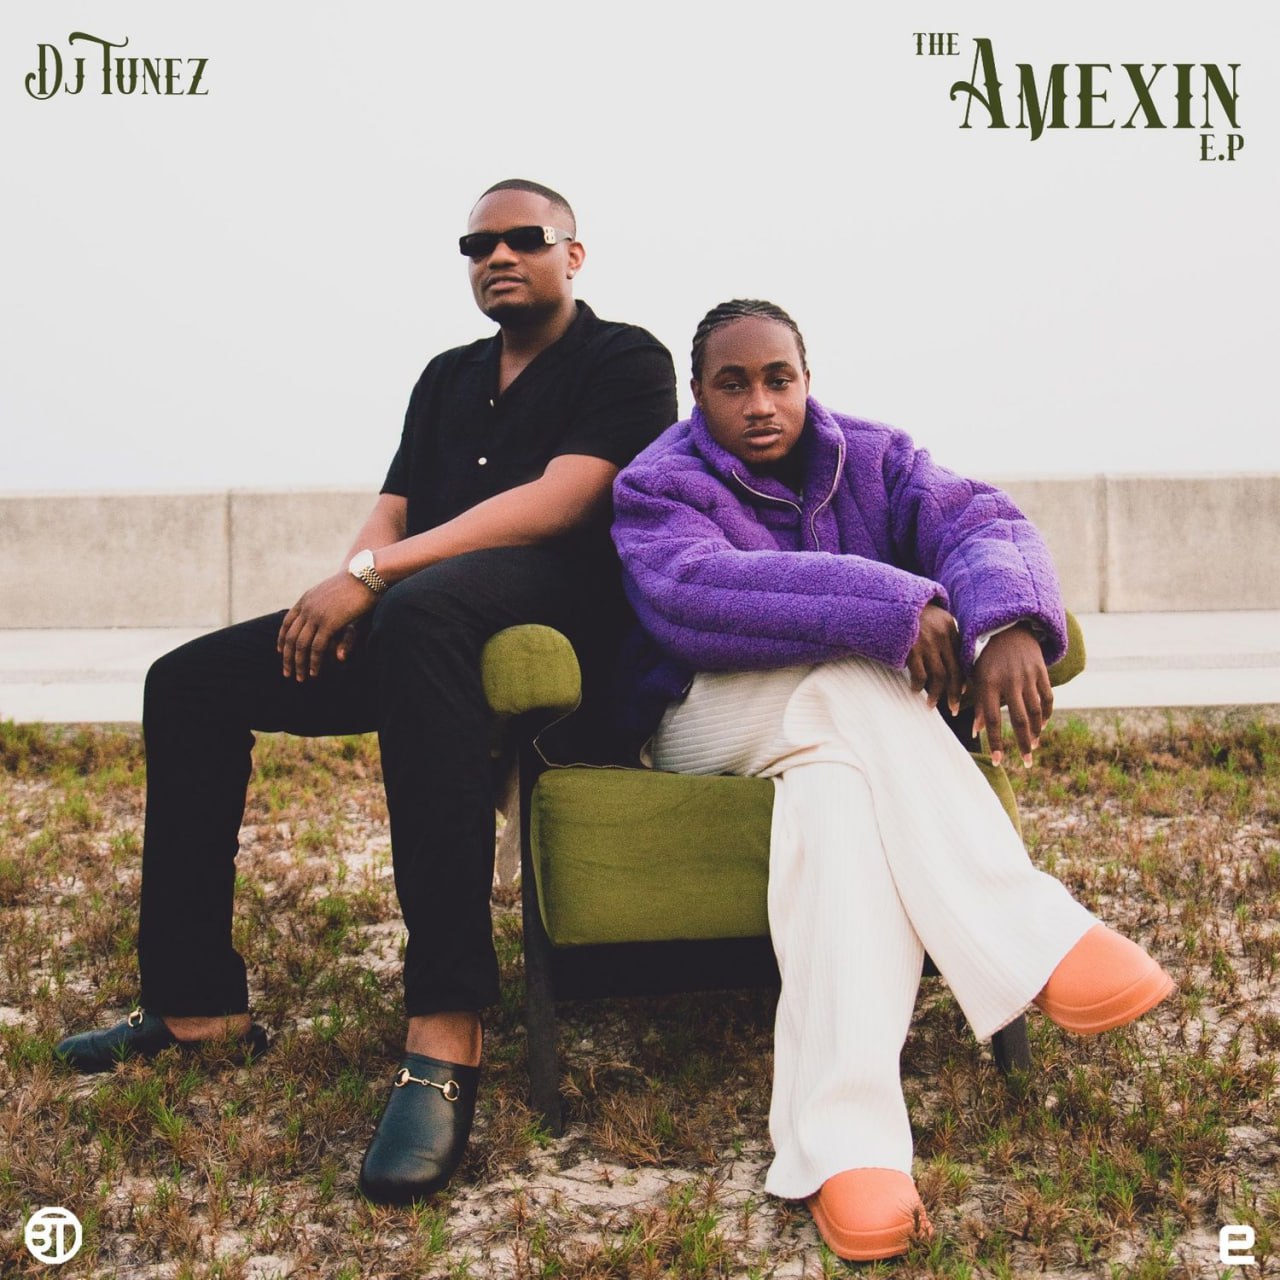 Already - DJ Tunez & Amexin